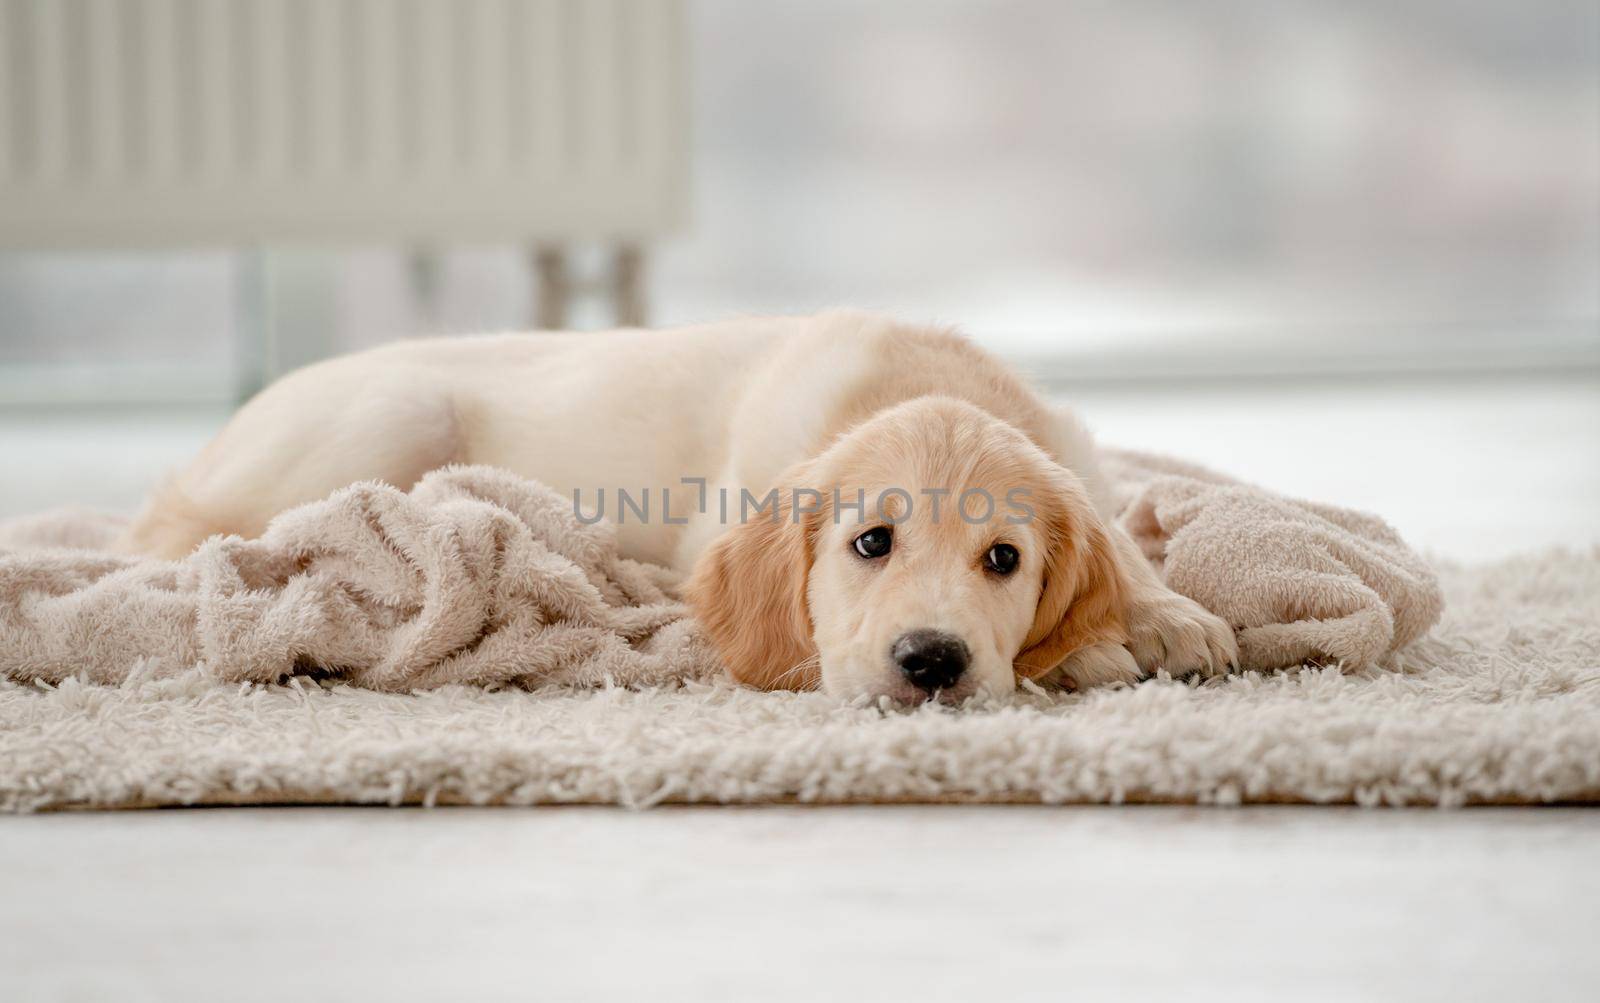 Lovely golden retriever puppy lying on rug near feeding bowl at home